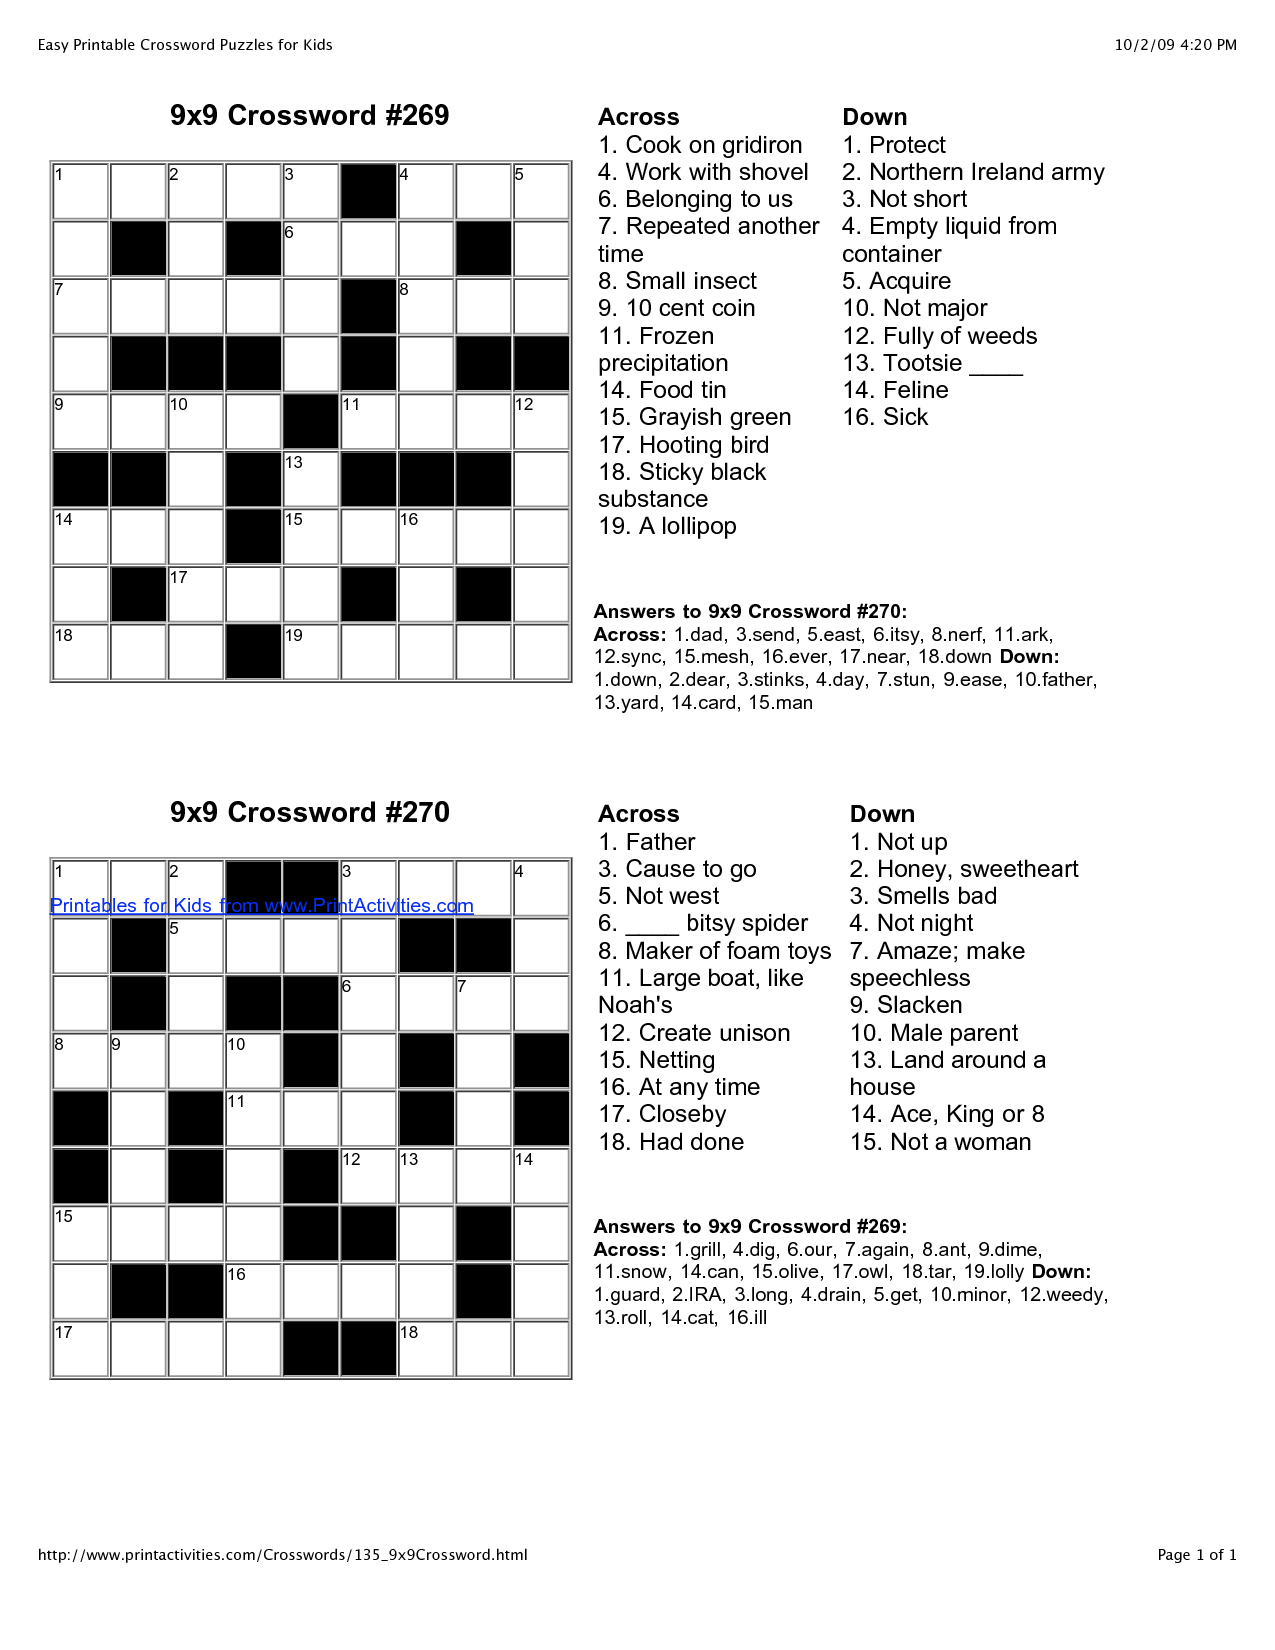 Easy Crossword Puzzles Printable Crossword Puzzles Crossword Puzzles  - Easy Printable Crossword Puzzle Maker